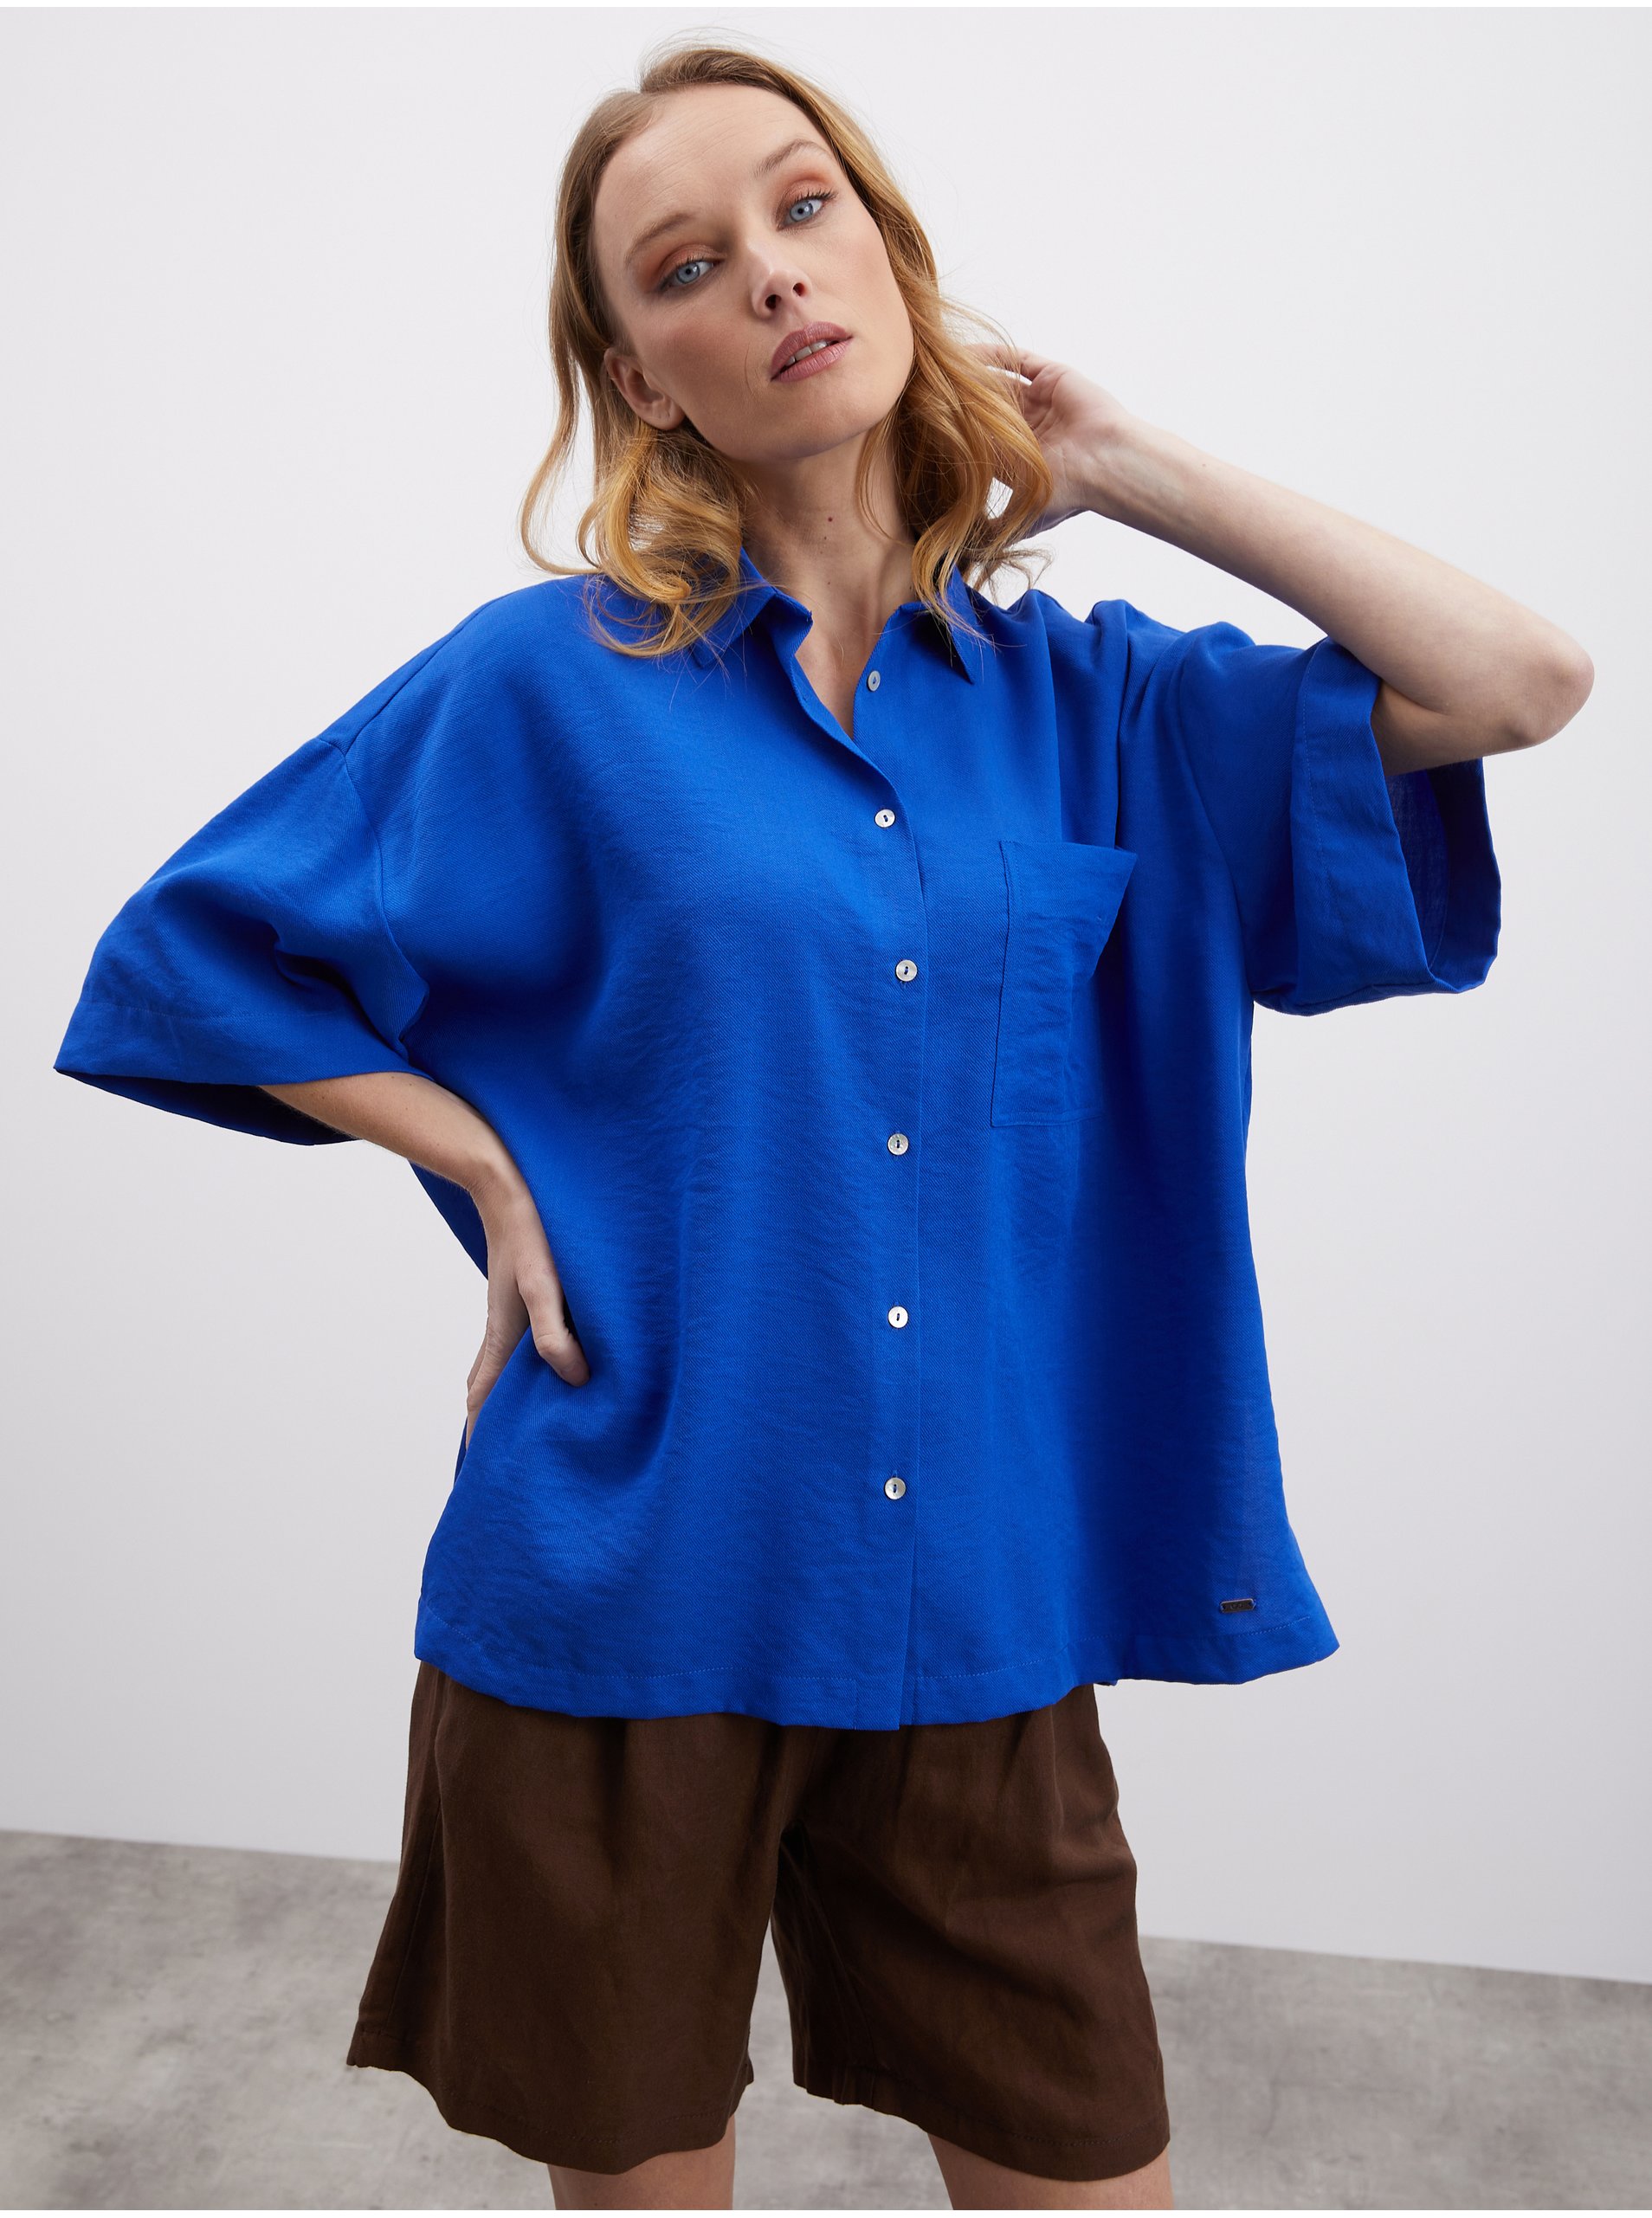 Lacno Modrá dámska oversize košeľa ZOOT.lab Rhiannon